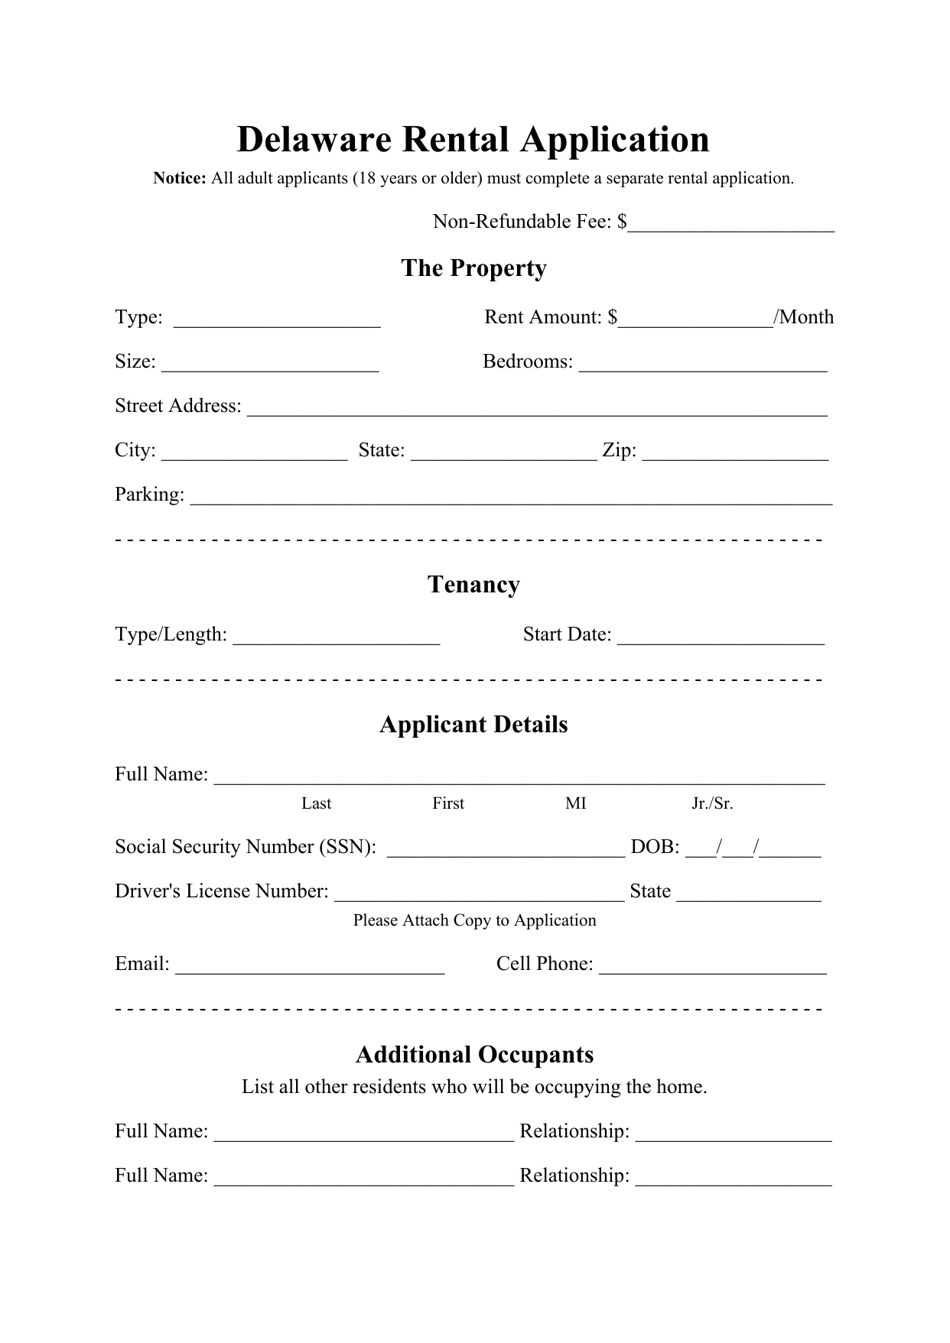 Rental Application Form - Delaware, Page 1